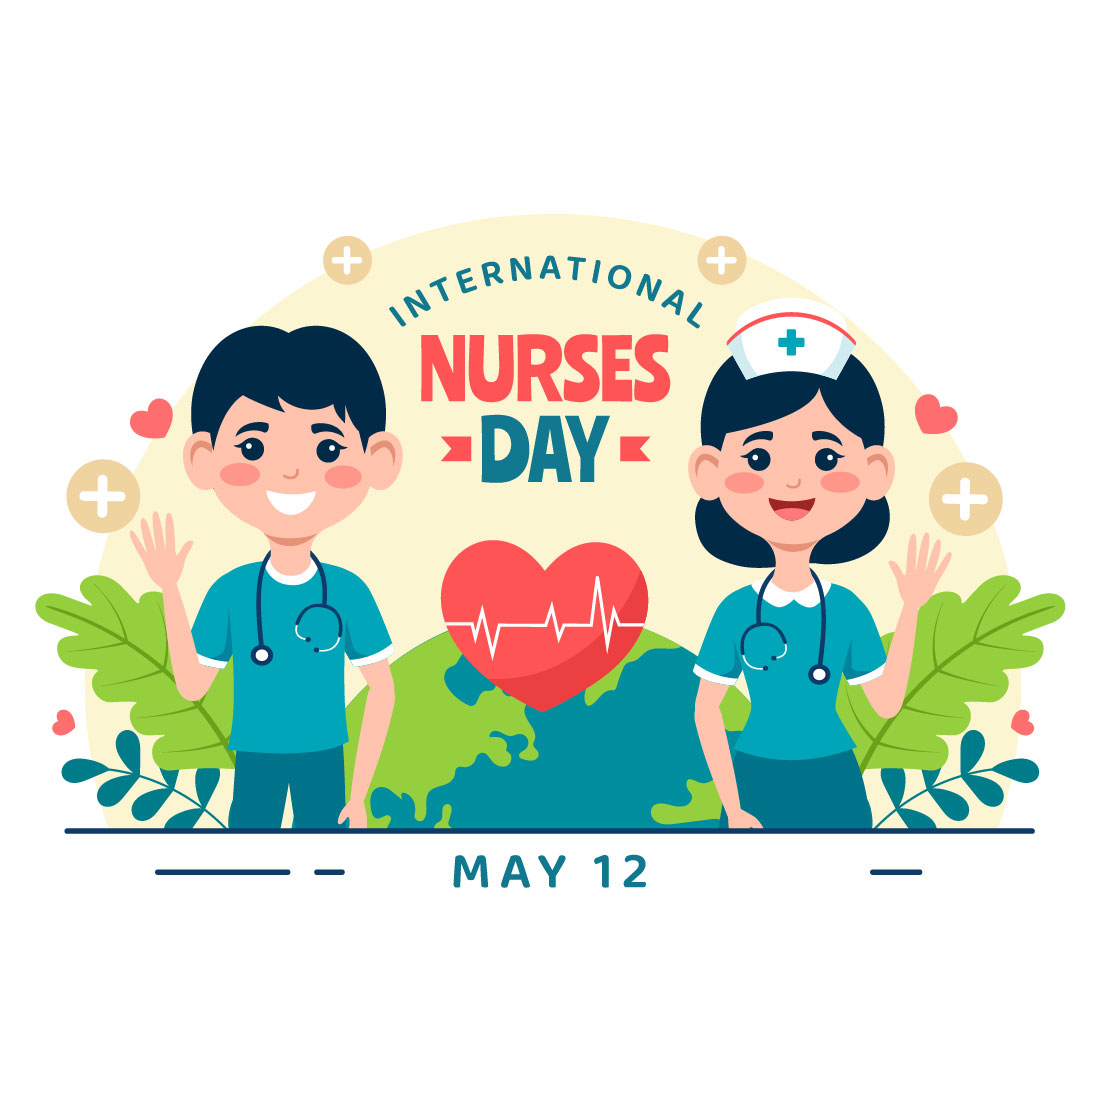 12 International Nurses Day Illustration cover image.